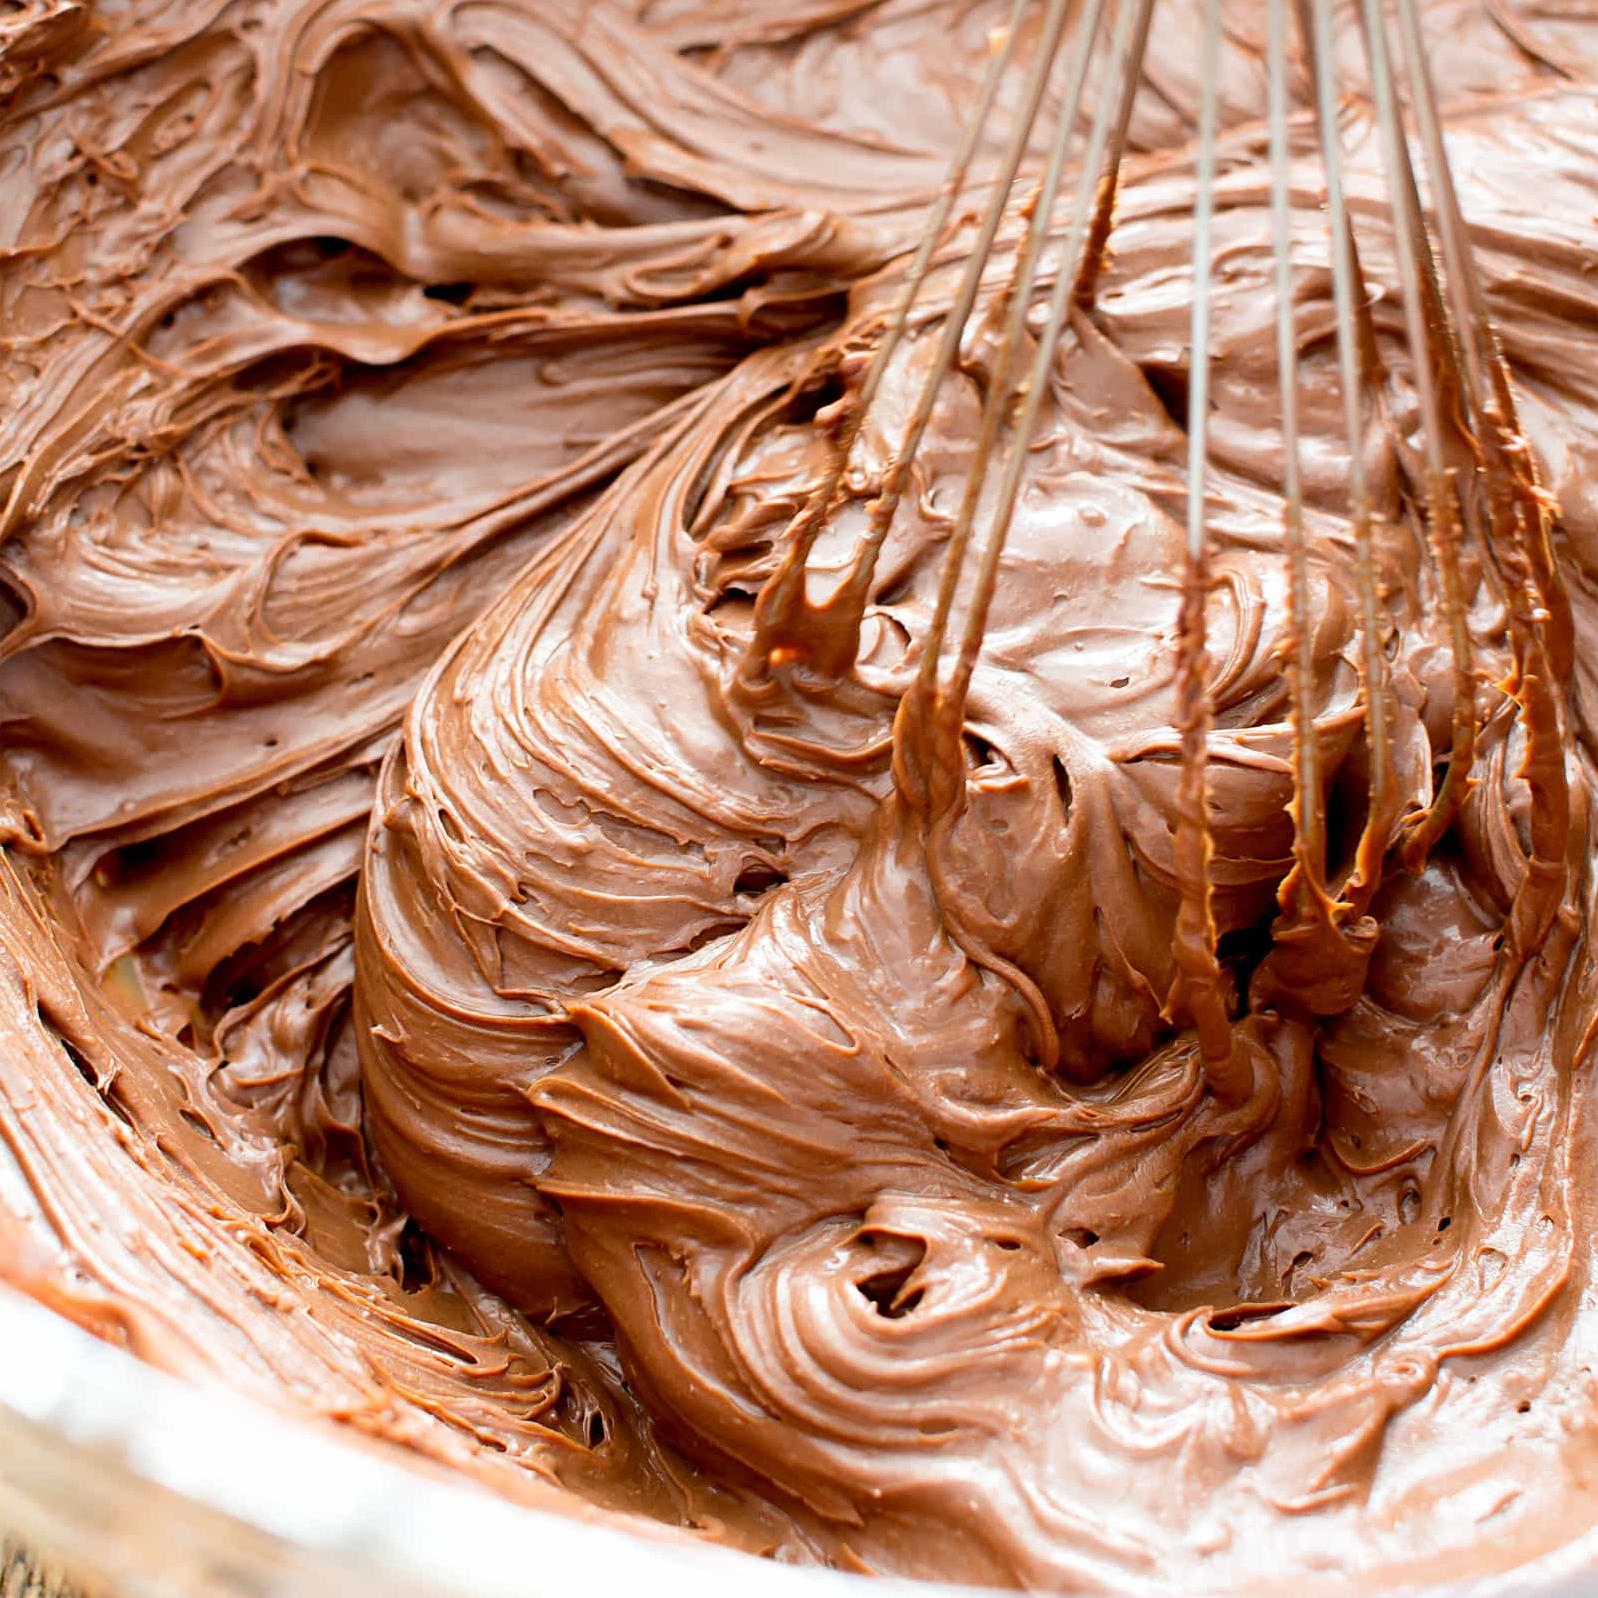  Keep things dairy-free with this chocolate glaze recipe.